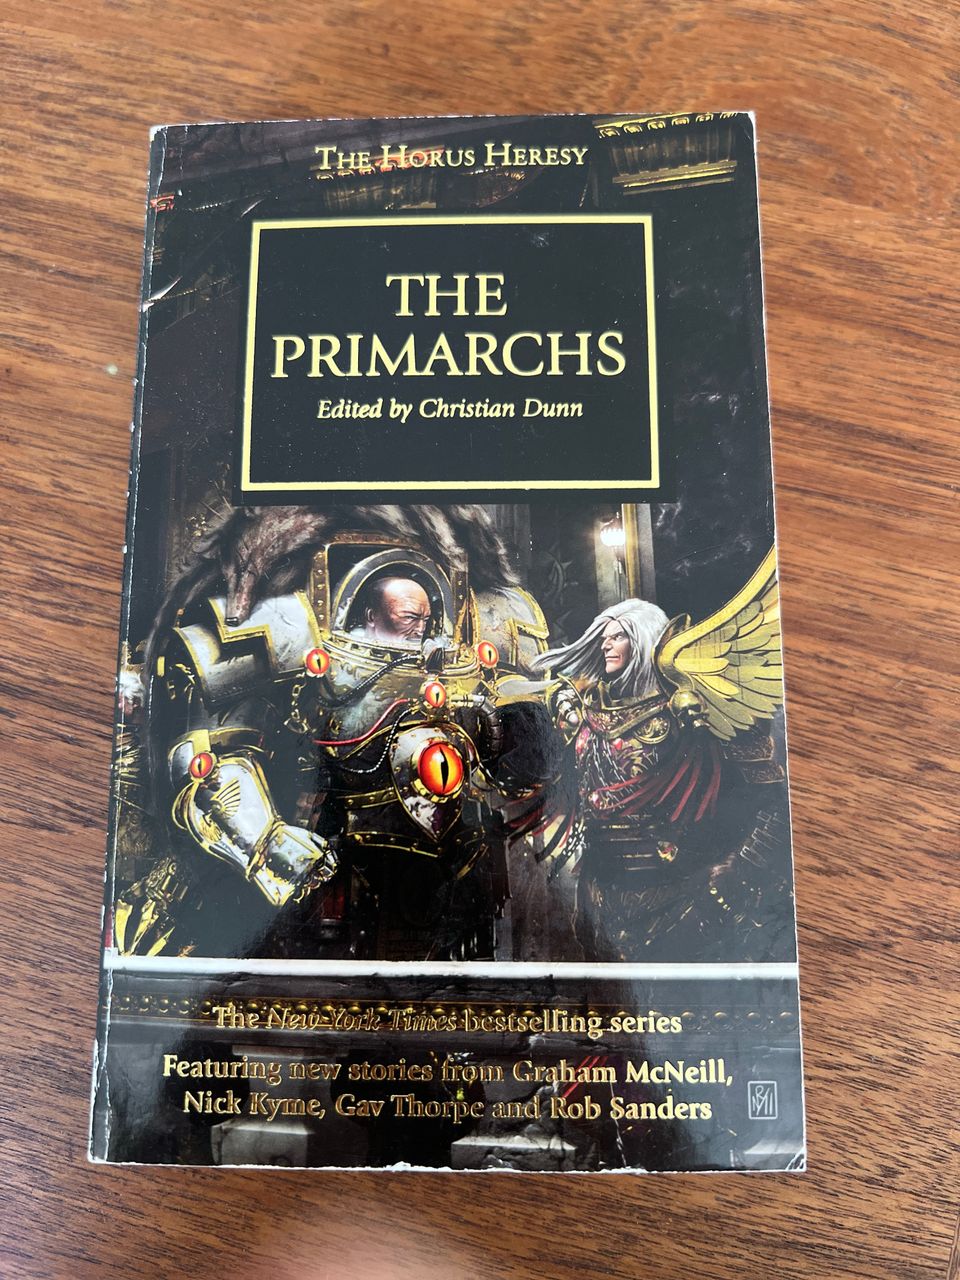 The Primarchs - The Horus Heresy kirjasarjan kirja